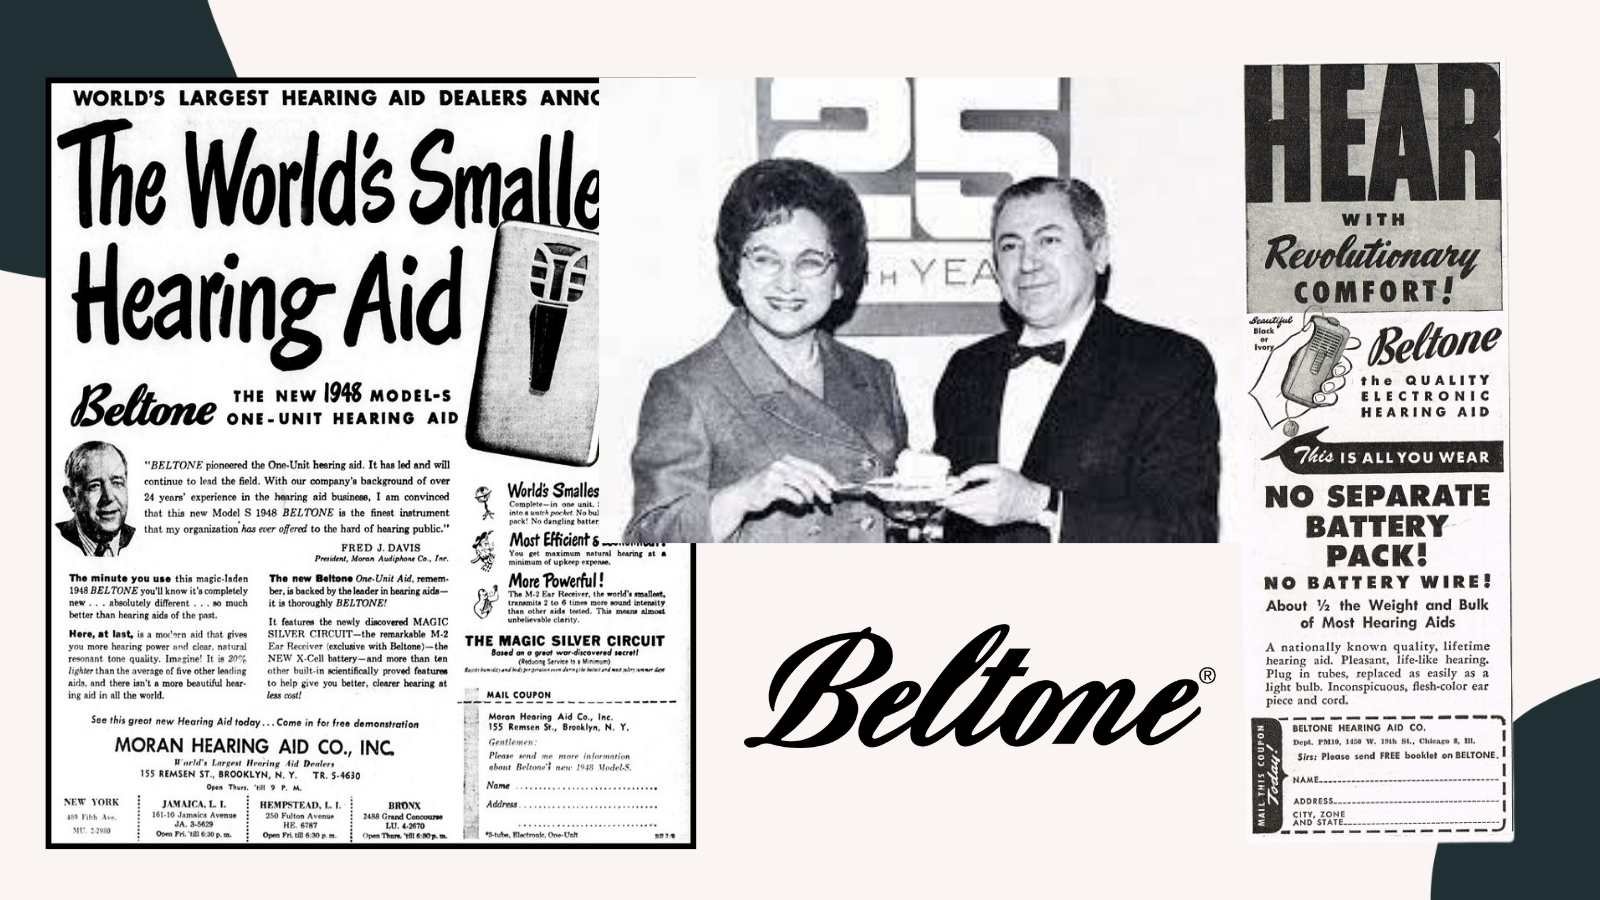 Beltone advertisements through the years